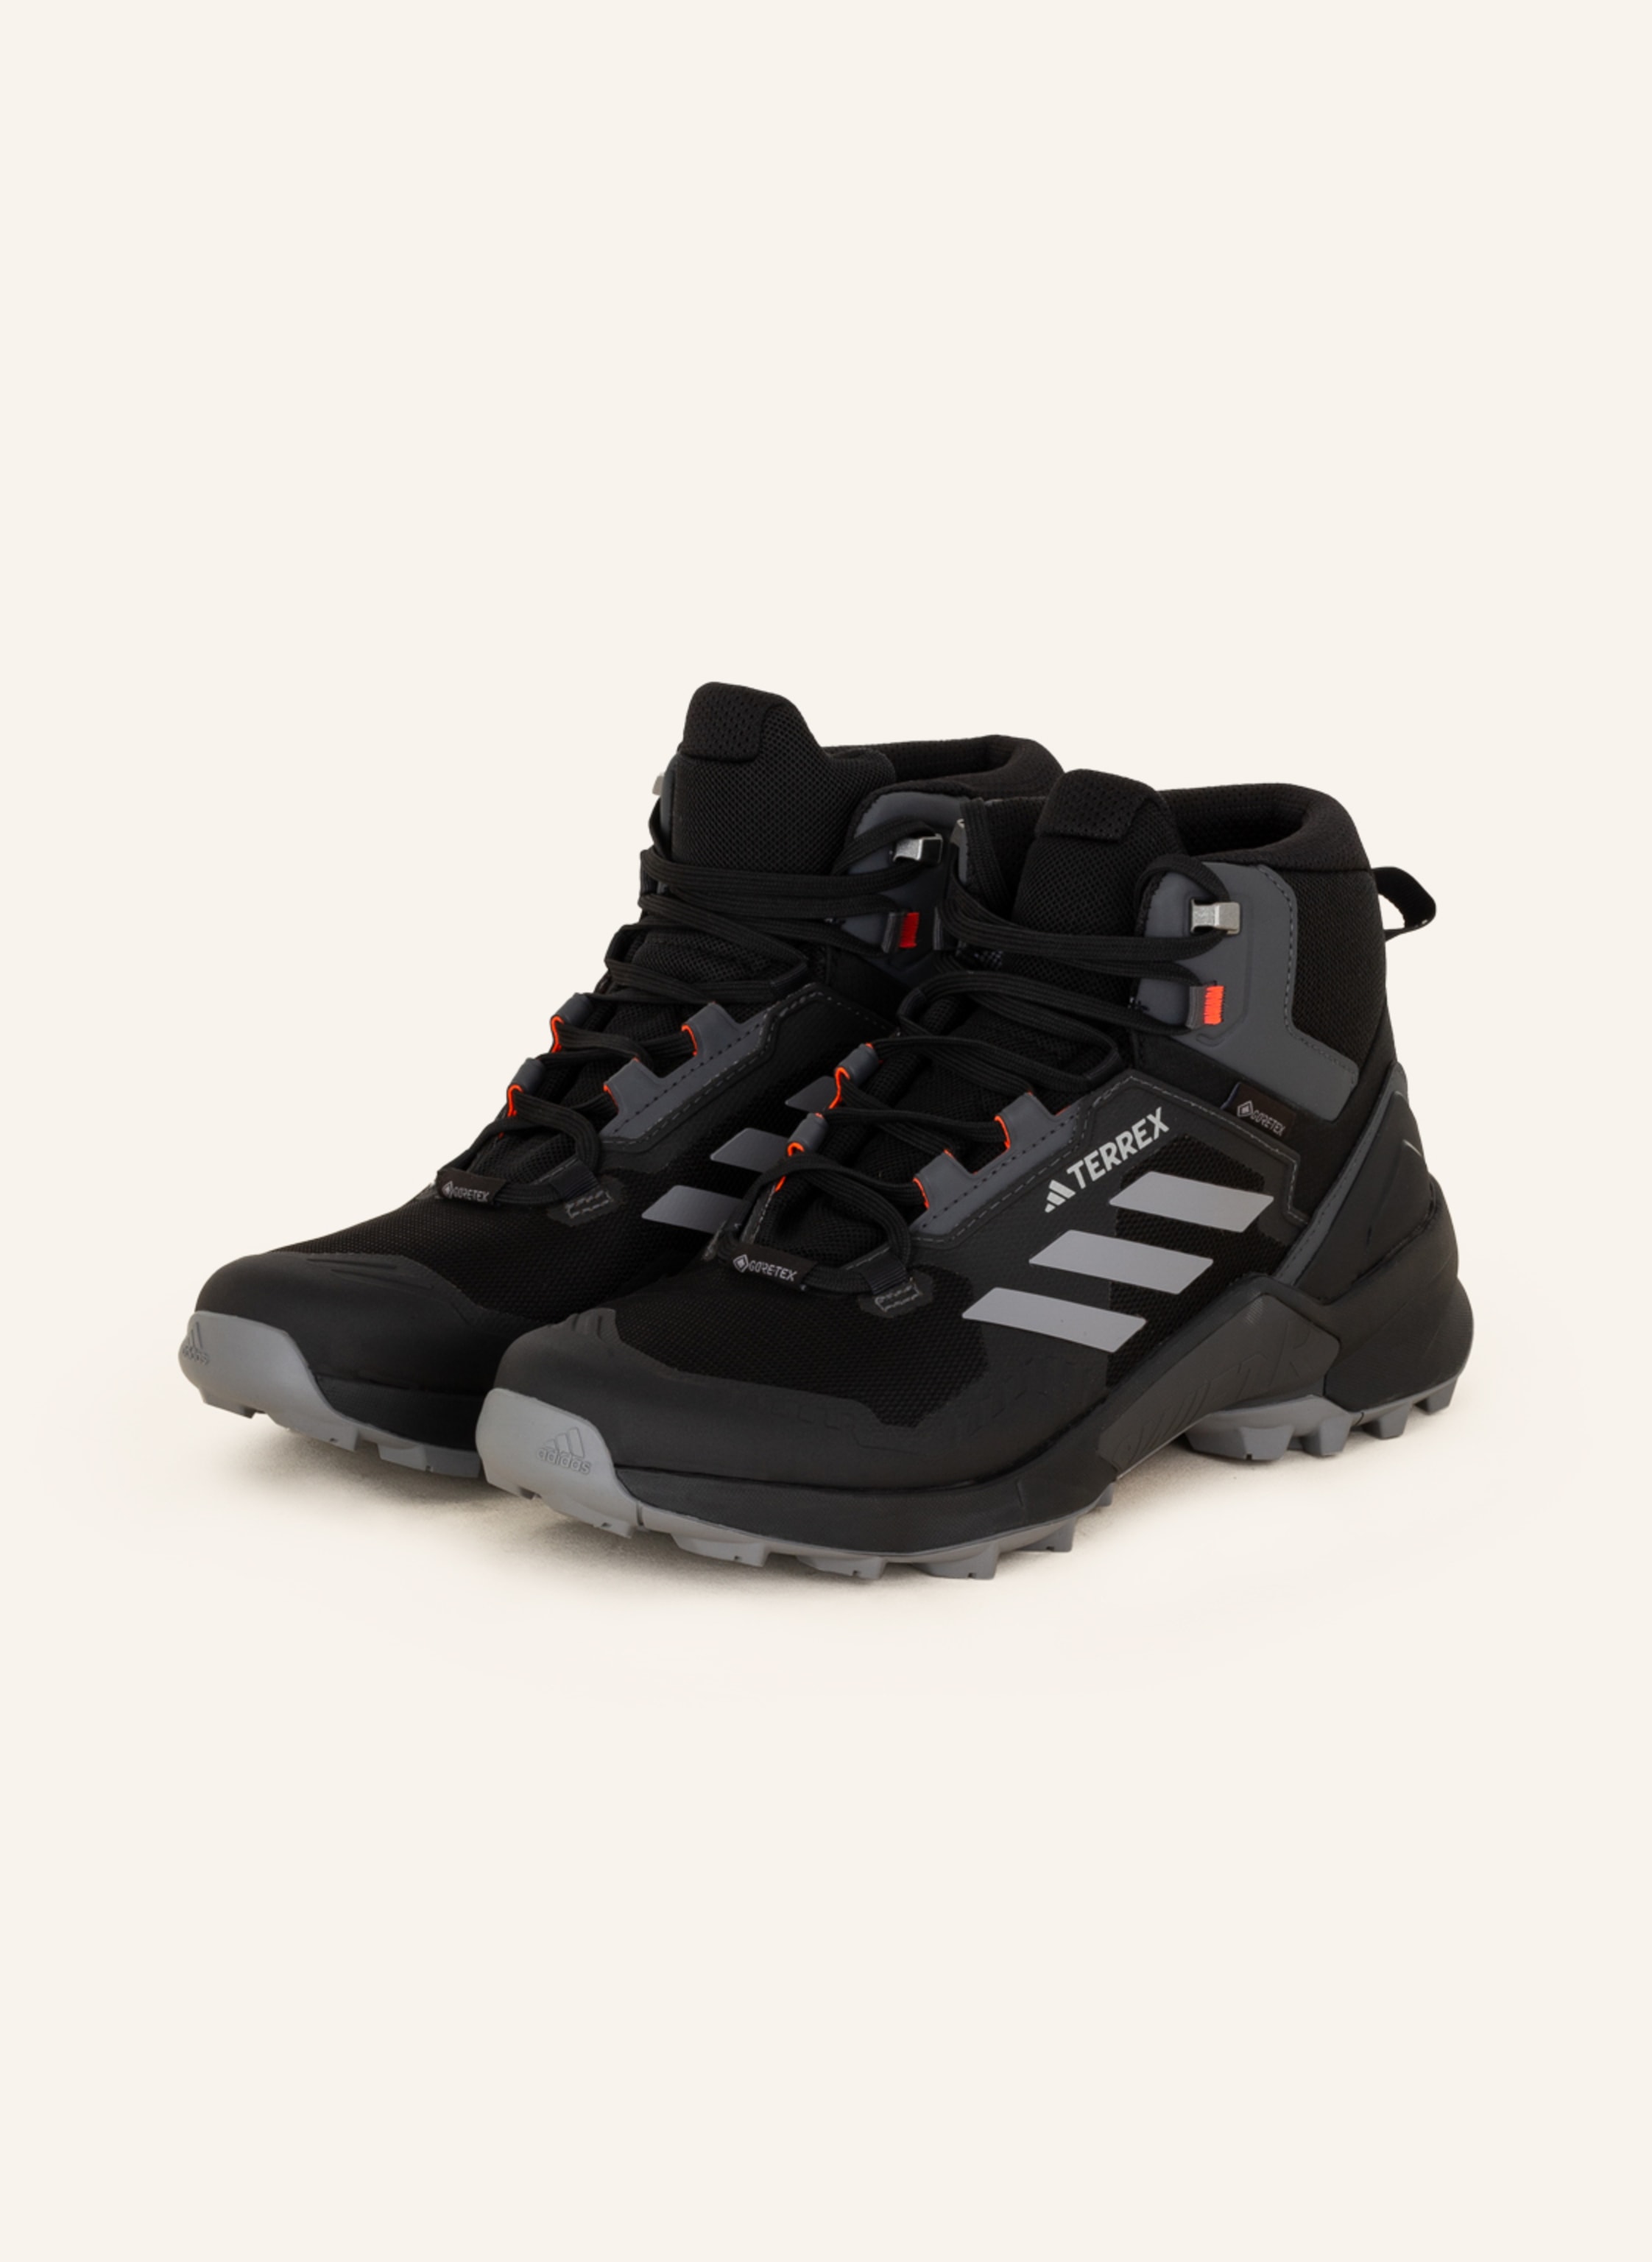 adidas TERREX Trekking shoes TERREX SWIFT R3 GTX in black/ gray